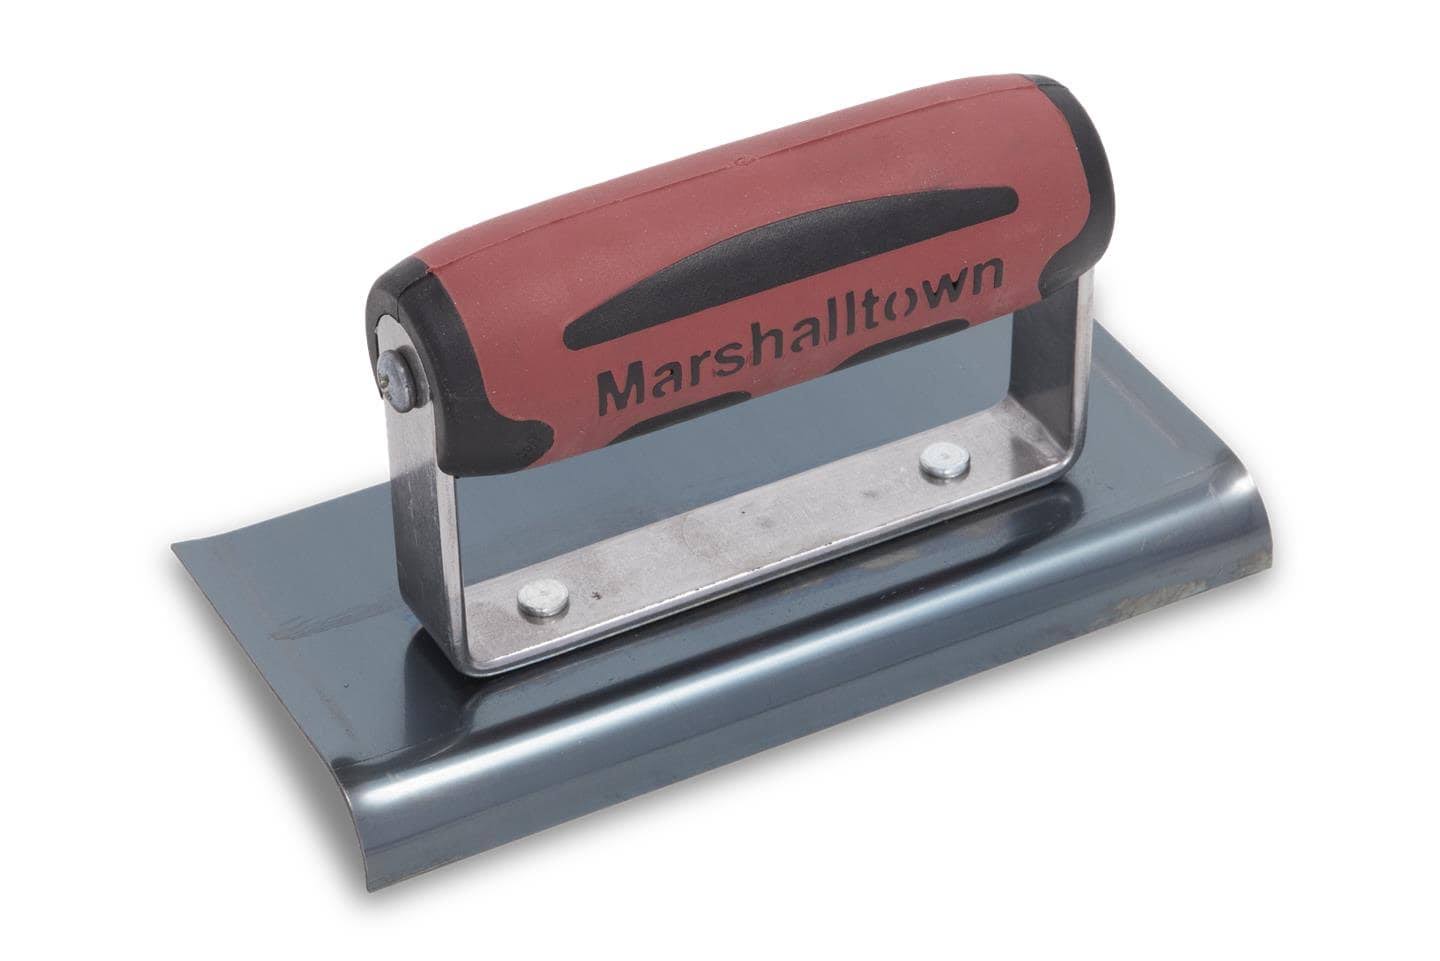 Marshalltown Blue Steel Curved End Hand Edger - 3" x 6"